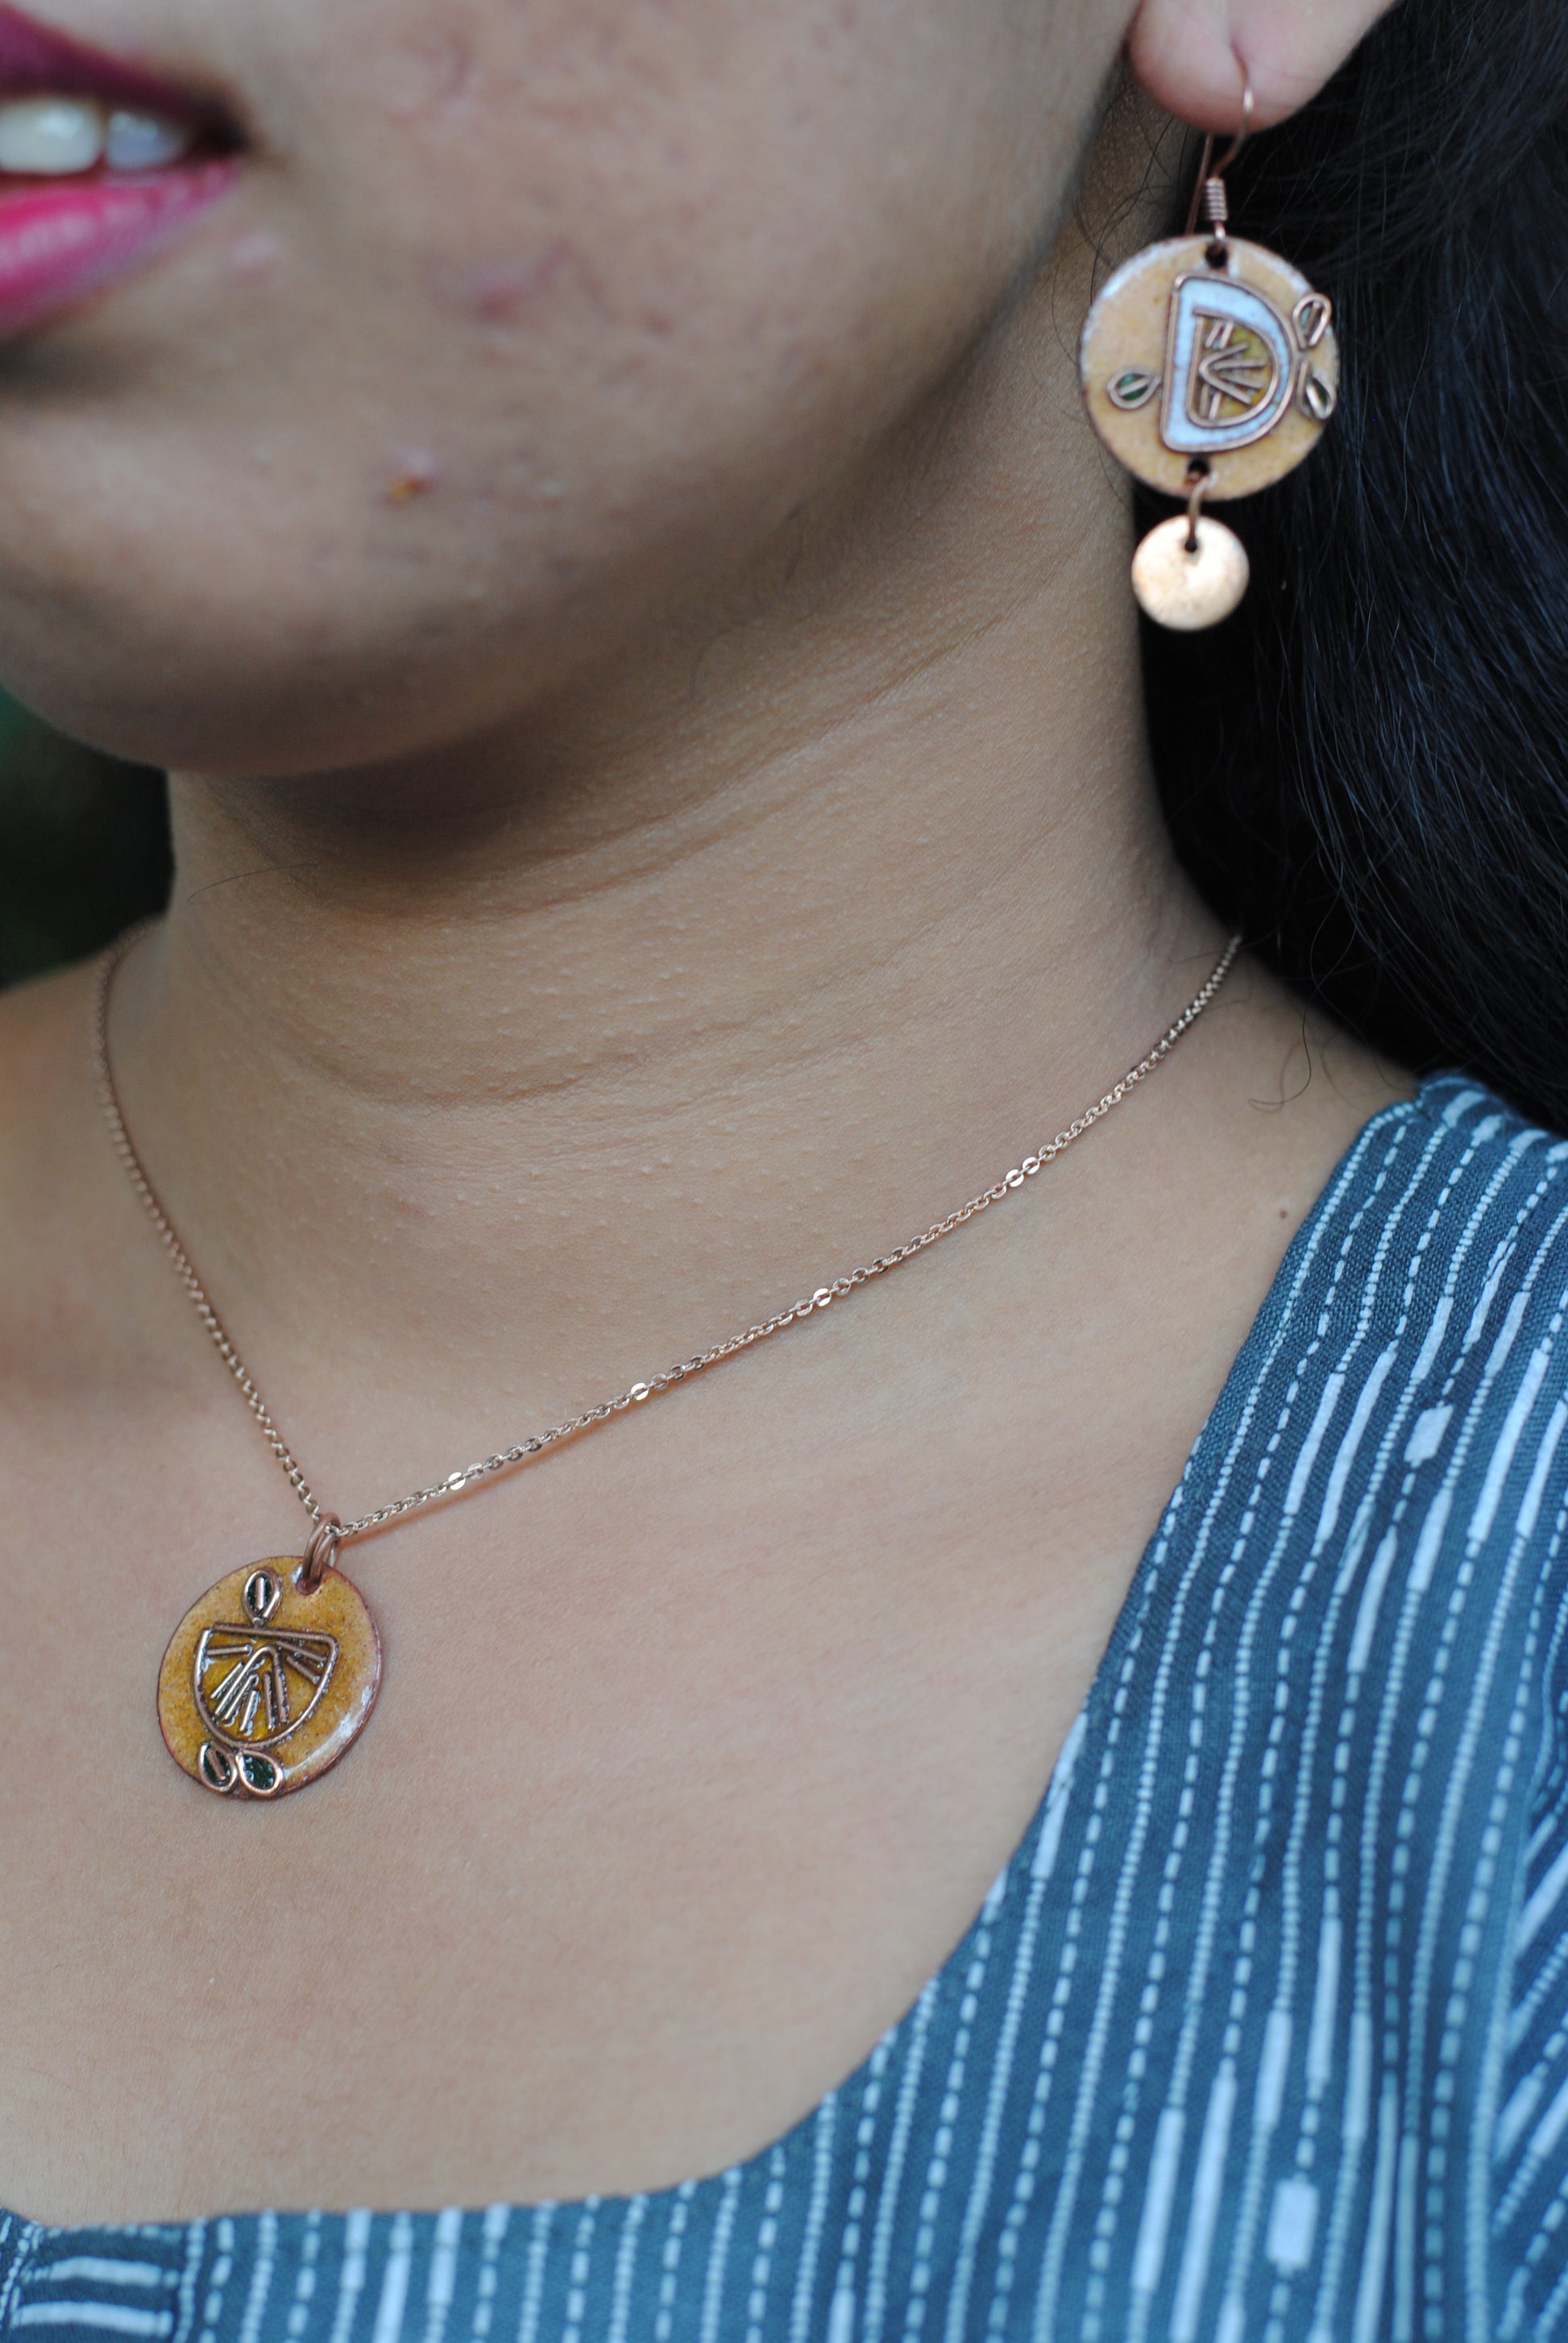 Copper enamel jewelry, funky pendant handcrafted in Maharashtra, India. Lemon theme